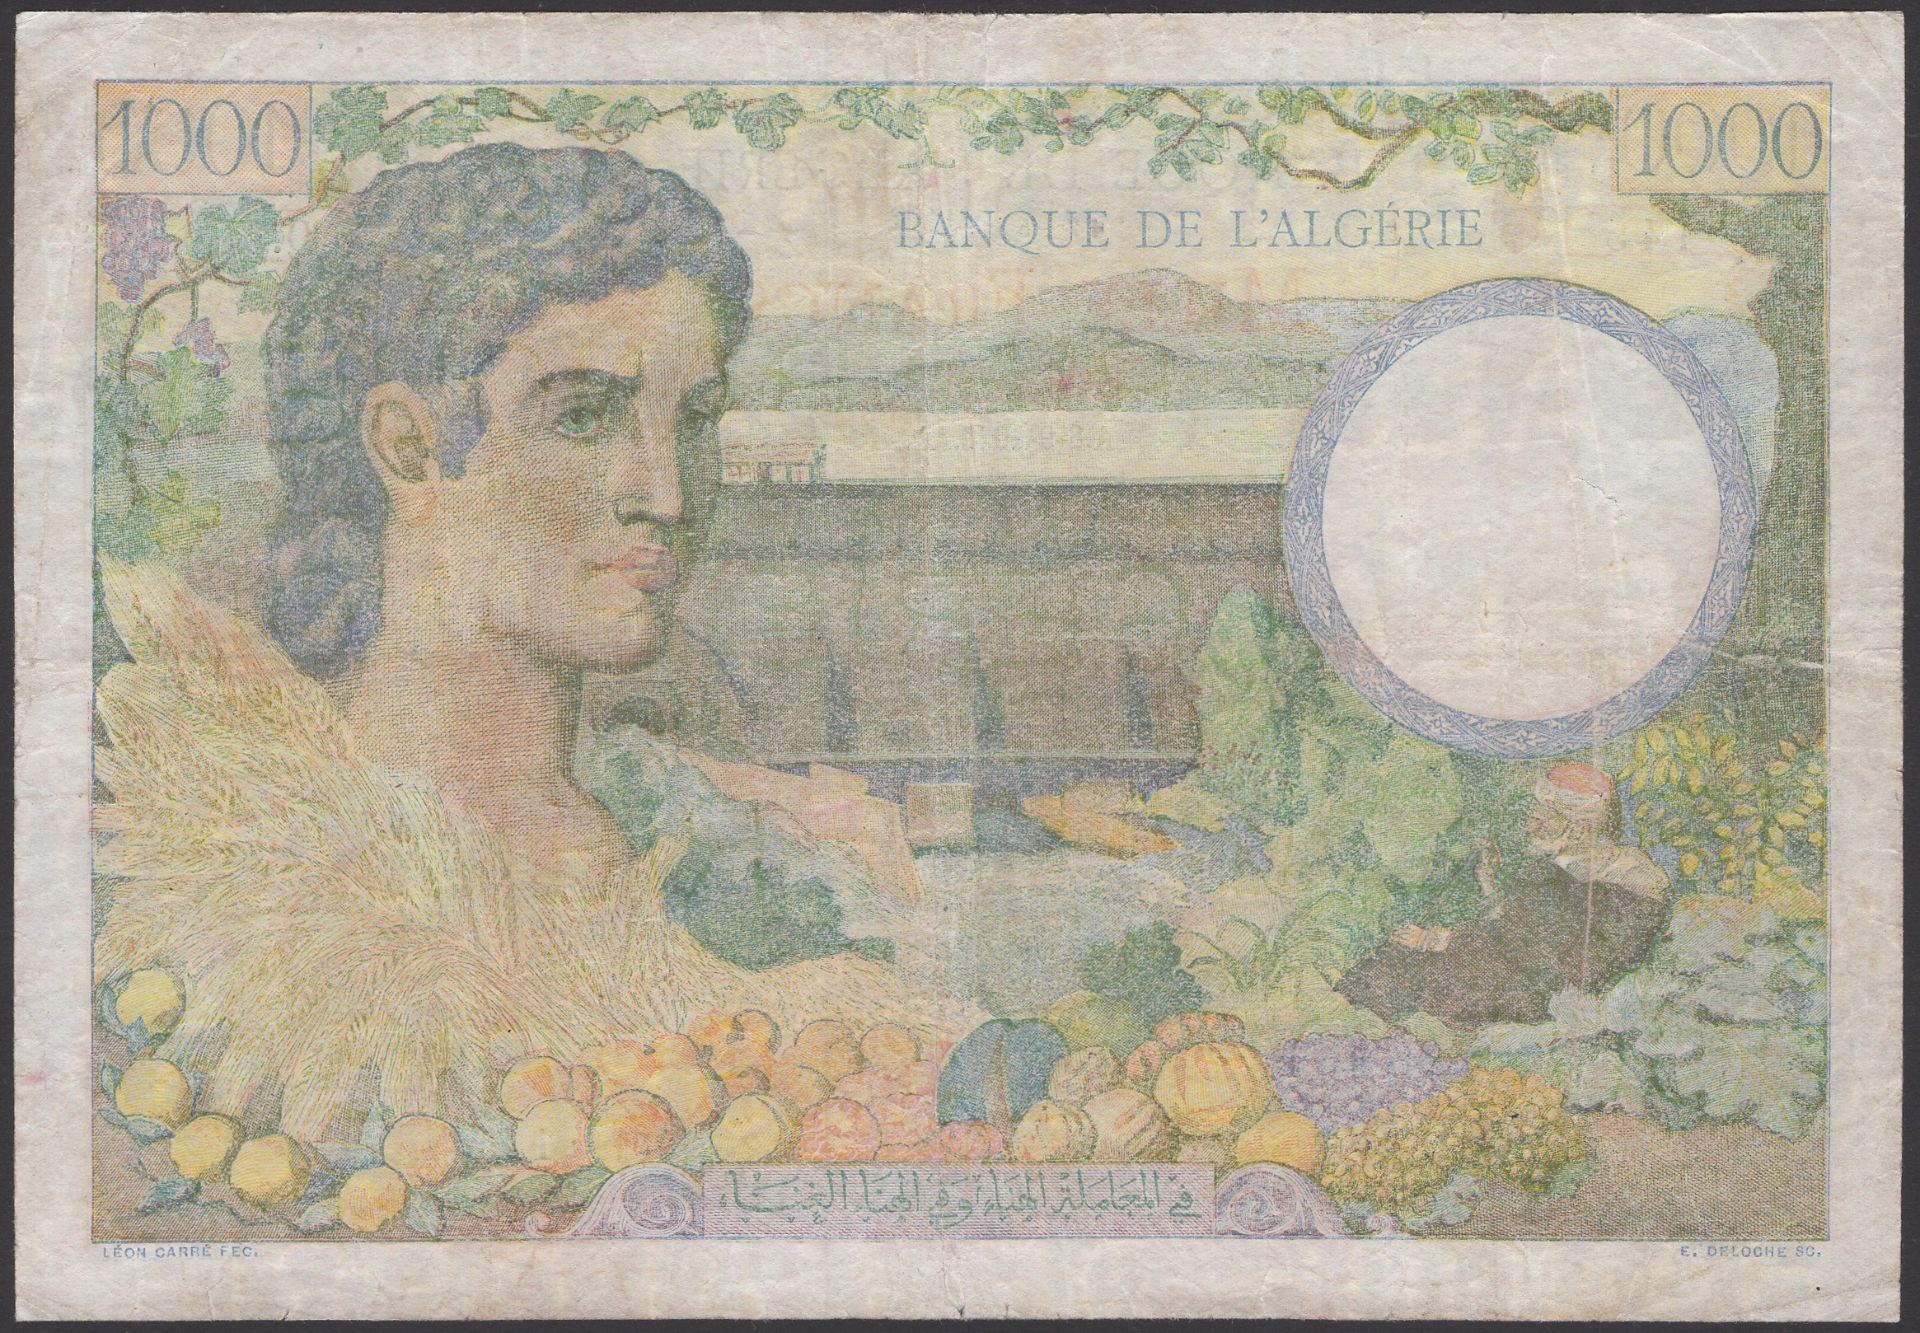 Banque de l'Algerie, 1000 Francs, 8 September 1942, serial number Q.589-145, a fairly attrac... - Image 2 of 2